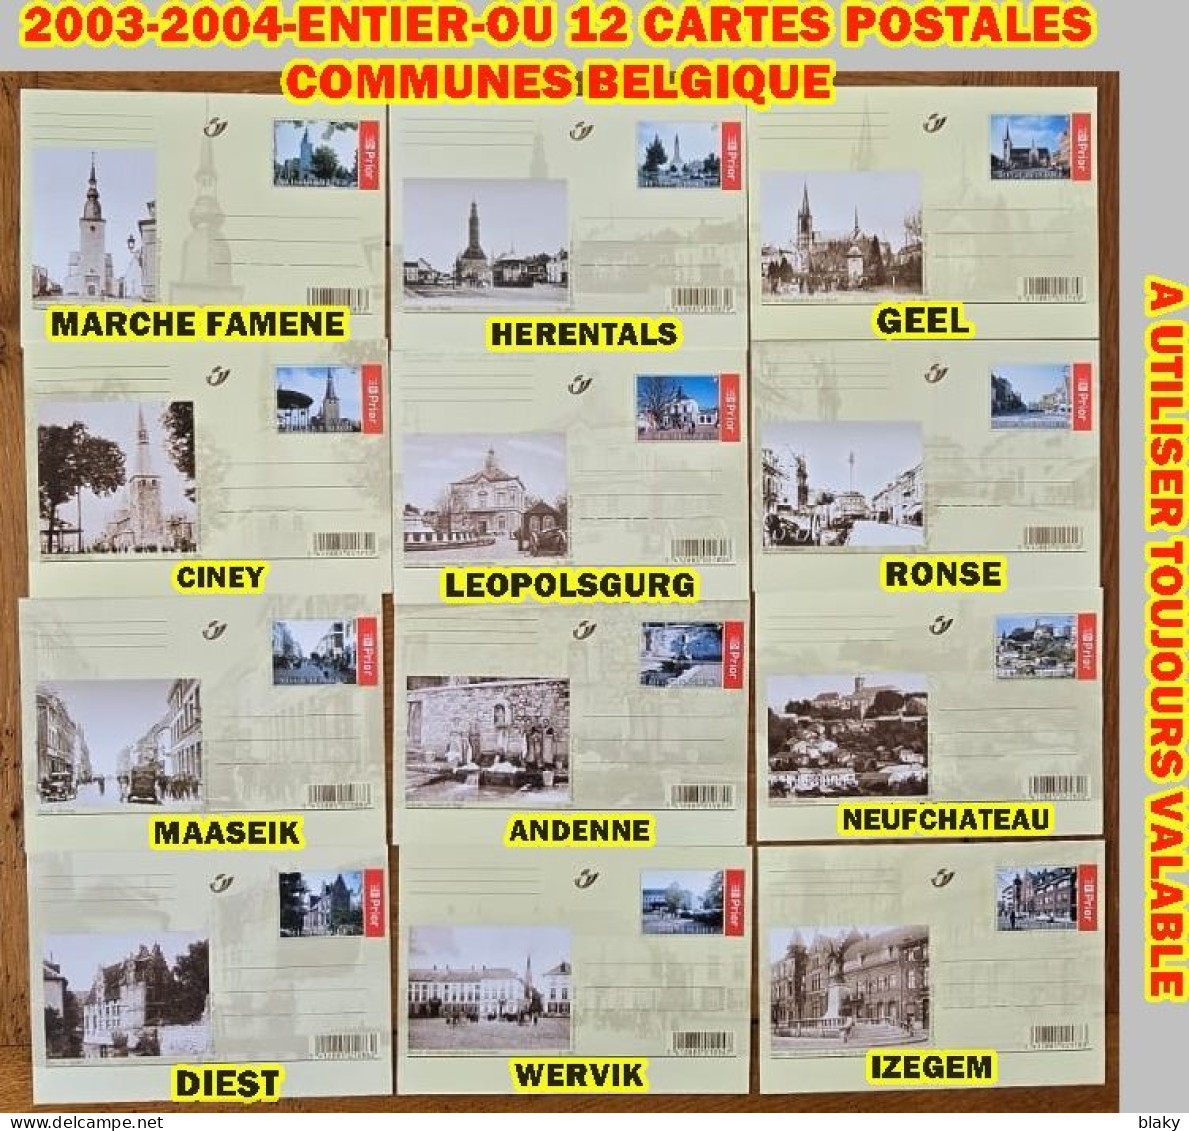 2003-2004-ENTIER-OU 12 CARTES POSTALES COMMUNES BELGES * IMPORTANT PRE TIMBREES - Geïllustreerde Briefkaarten (1971-2014) [BK]